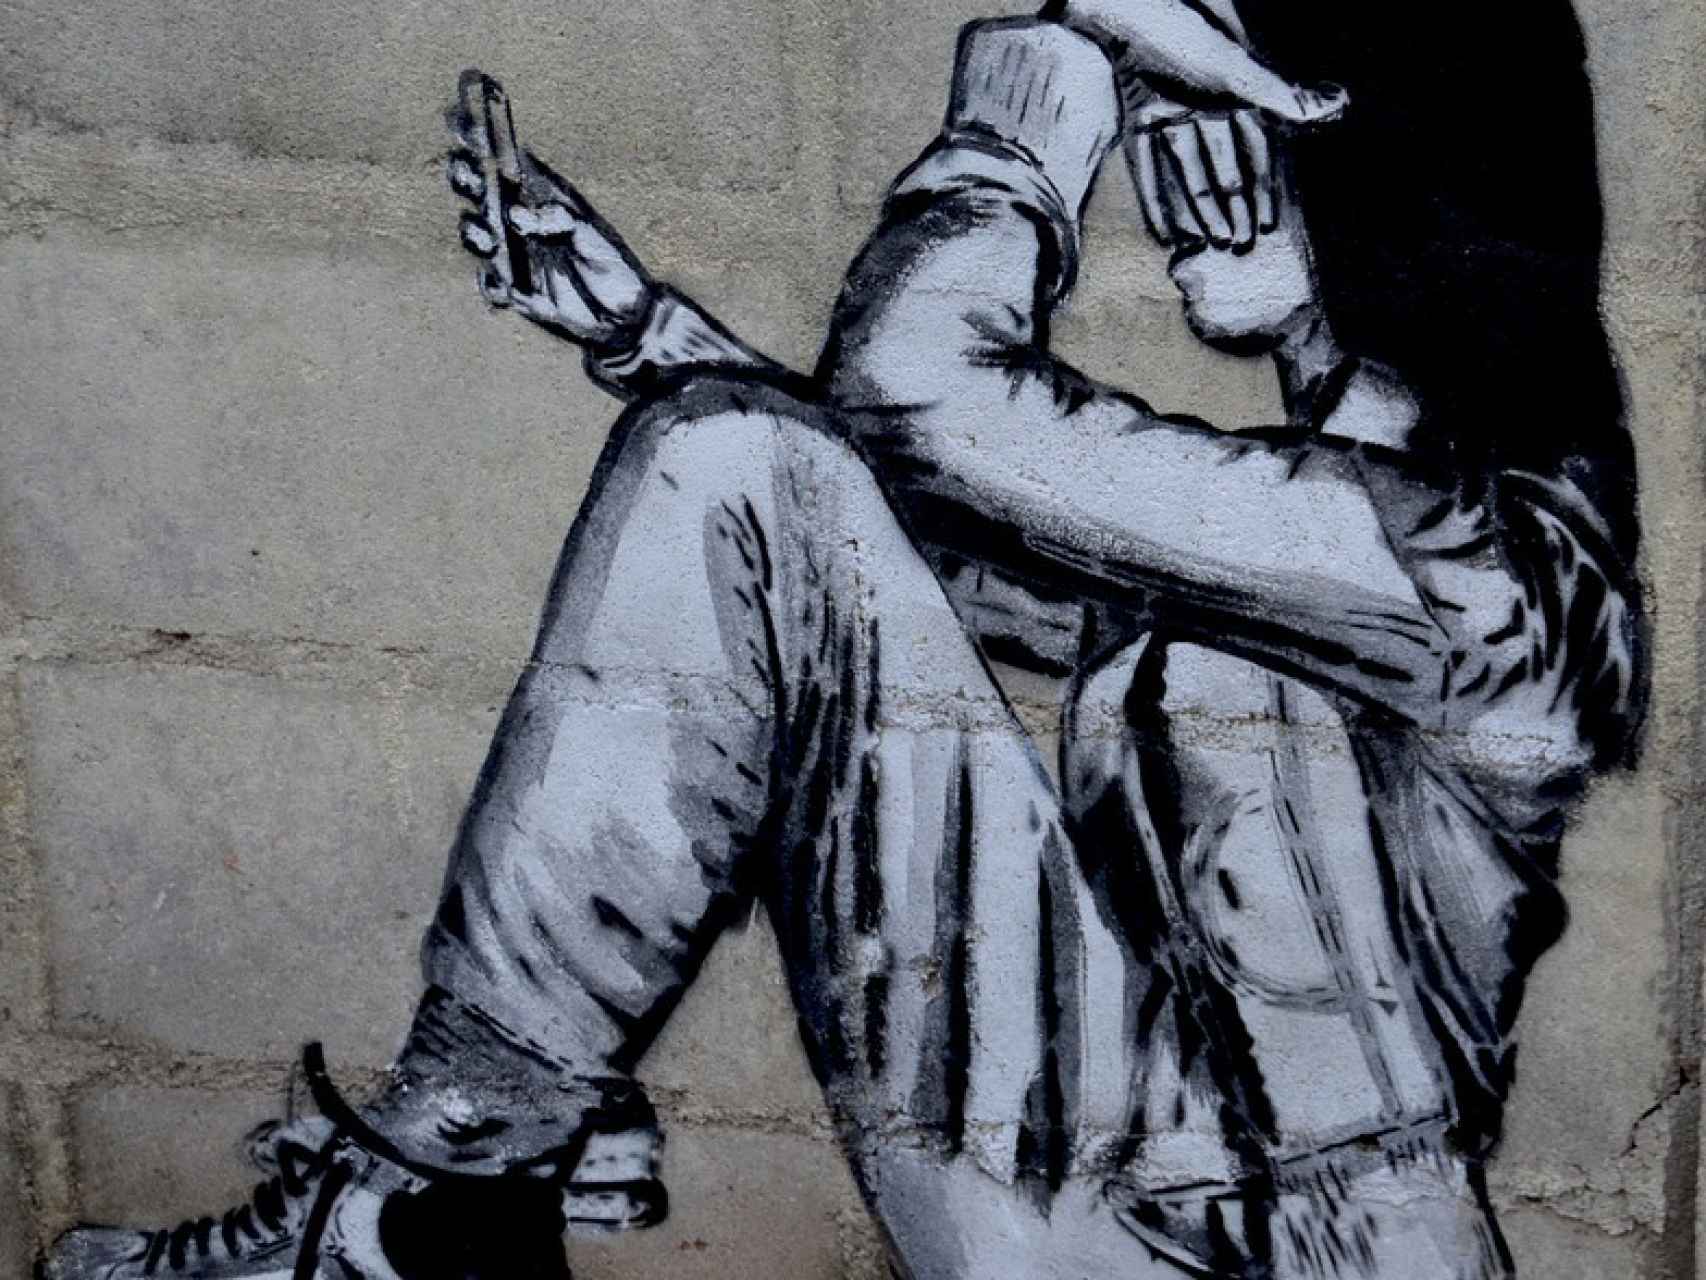 Grafiti de una mujer sufriendo acoso a través del móvil.